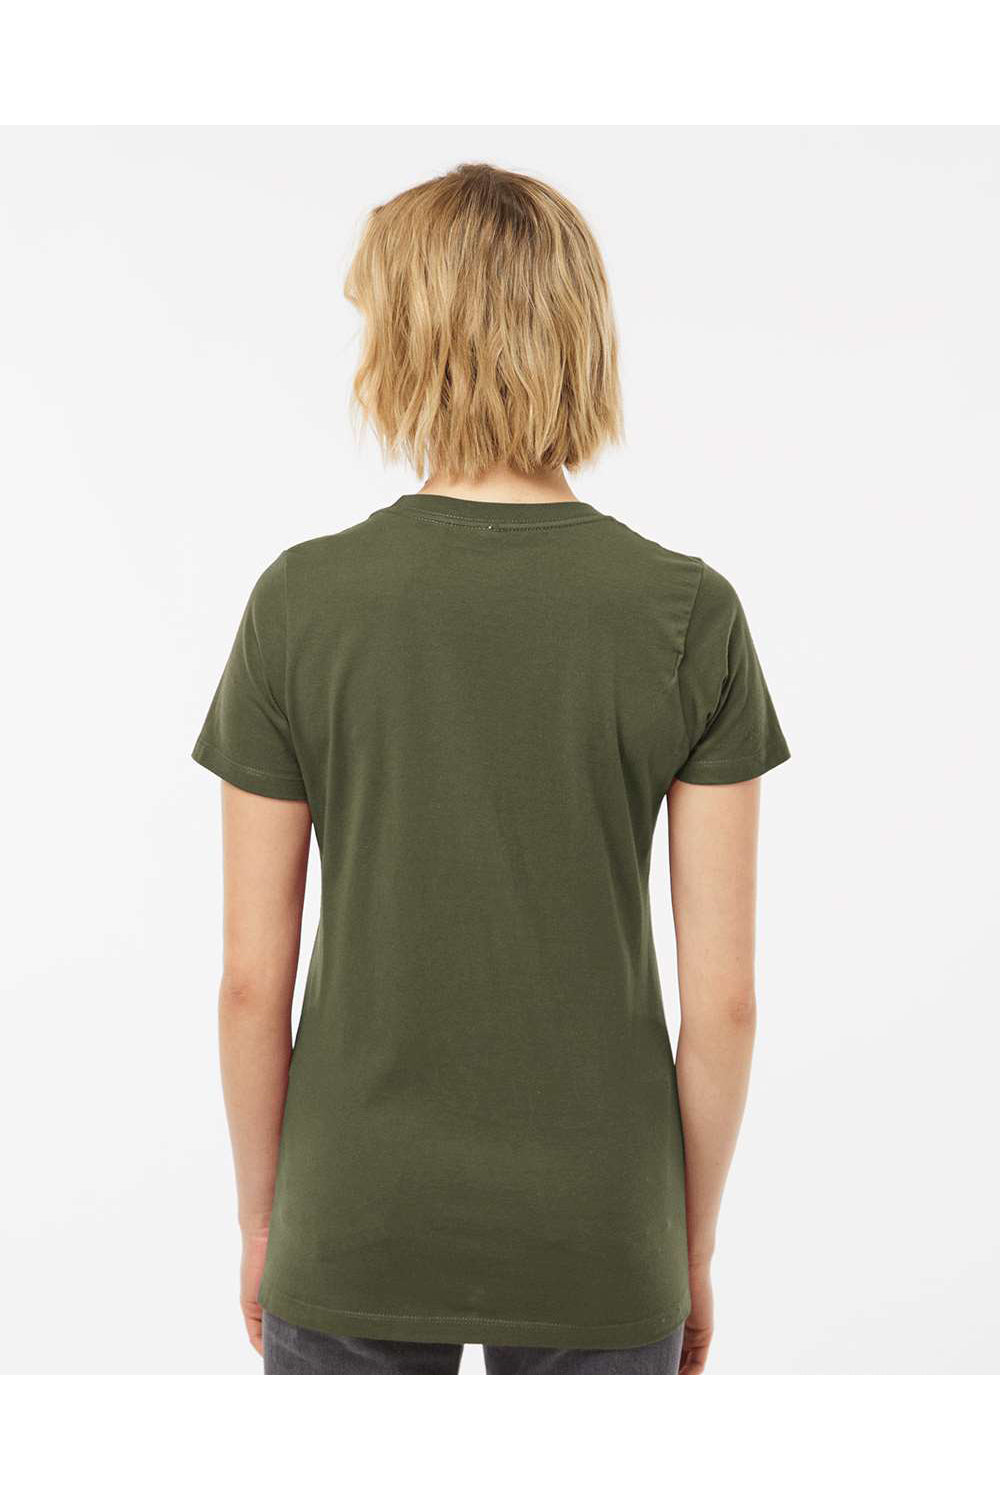 Tultex 516 Womens Premium Short Sleeve Crewneck T-Shirt Olive Green Model Back